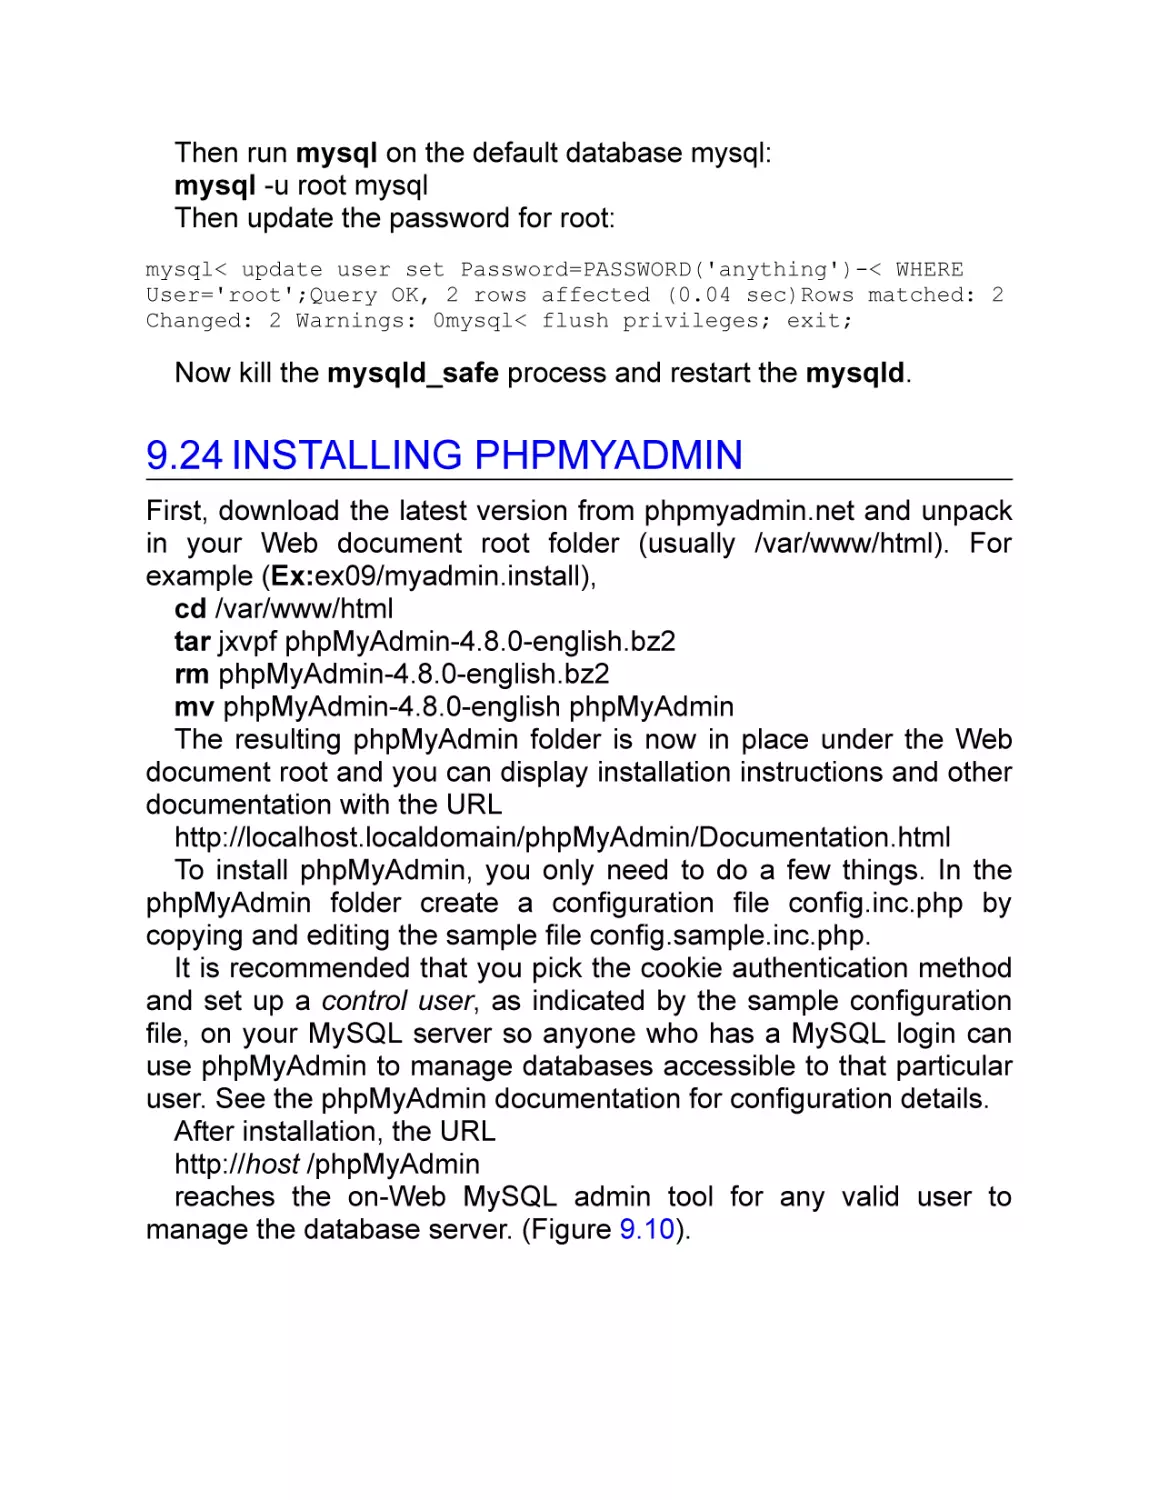 9.24 Installing phpMyAdmin